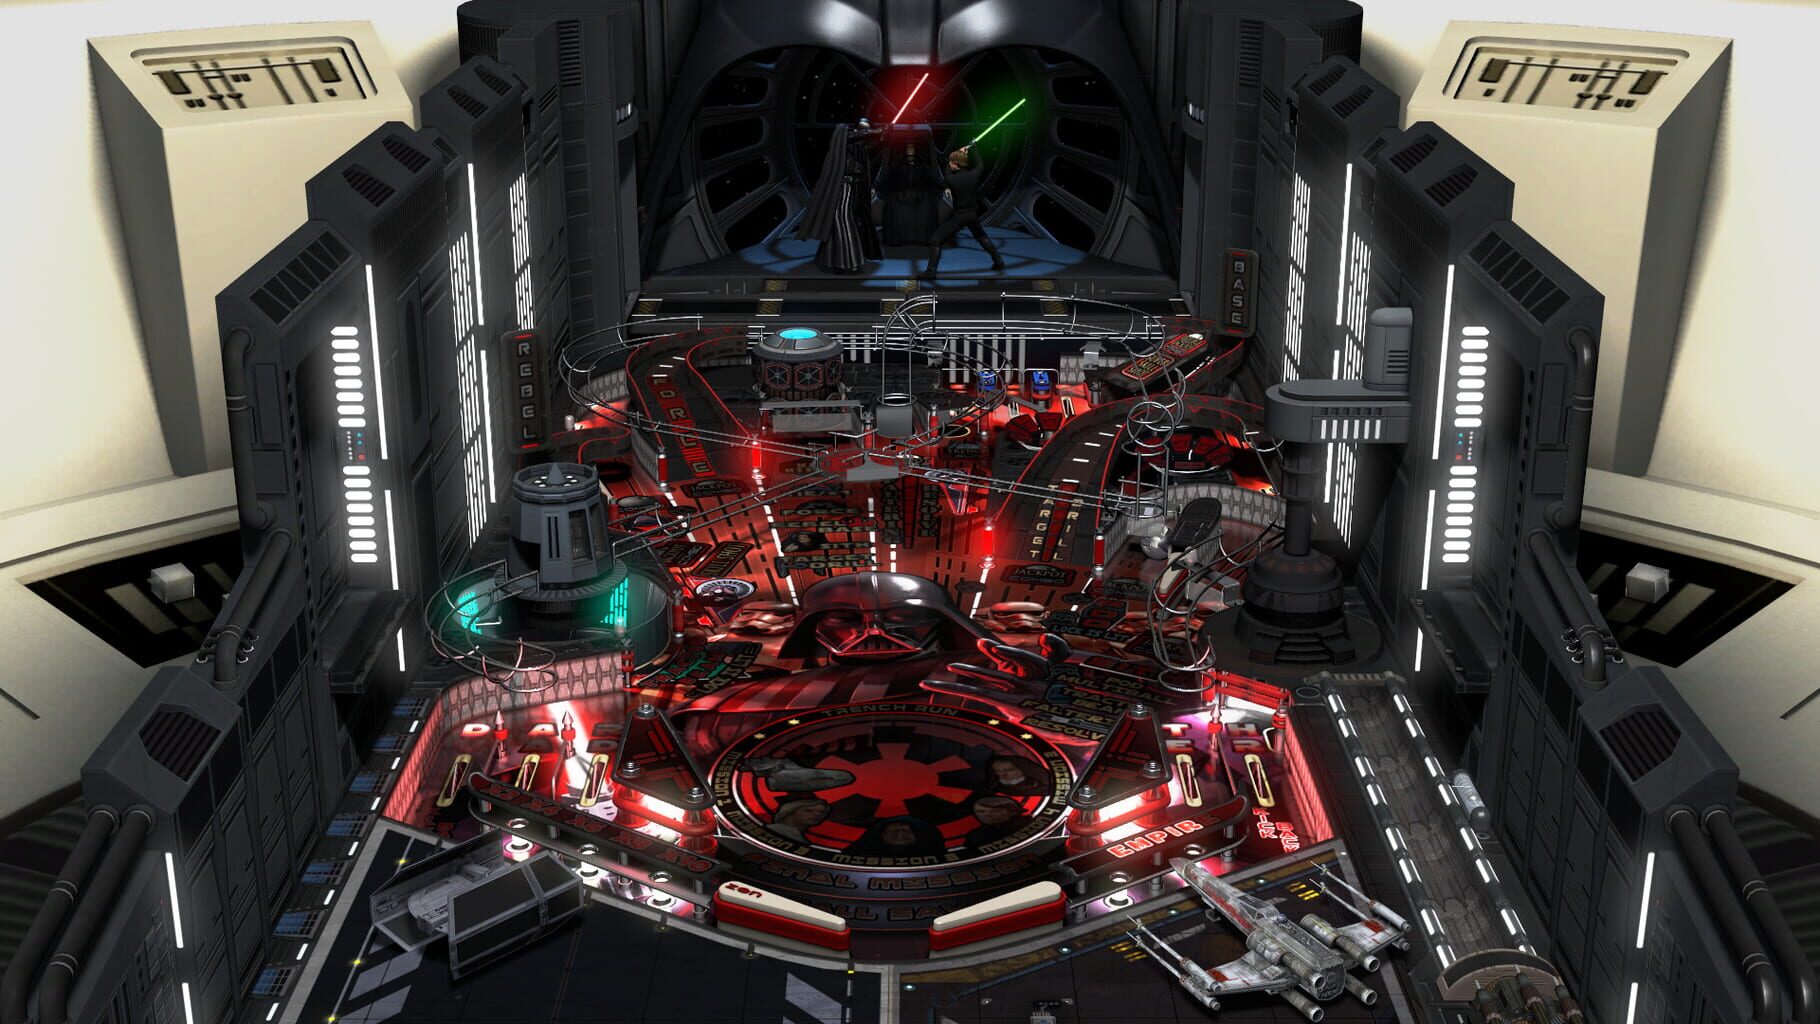 Captura de pantalla - Pinball FX3: Star Wars Pinball - Balance of the Force